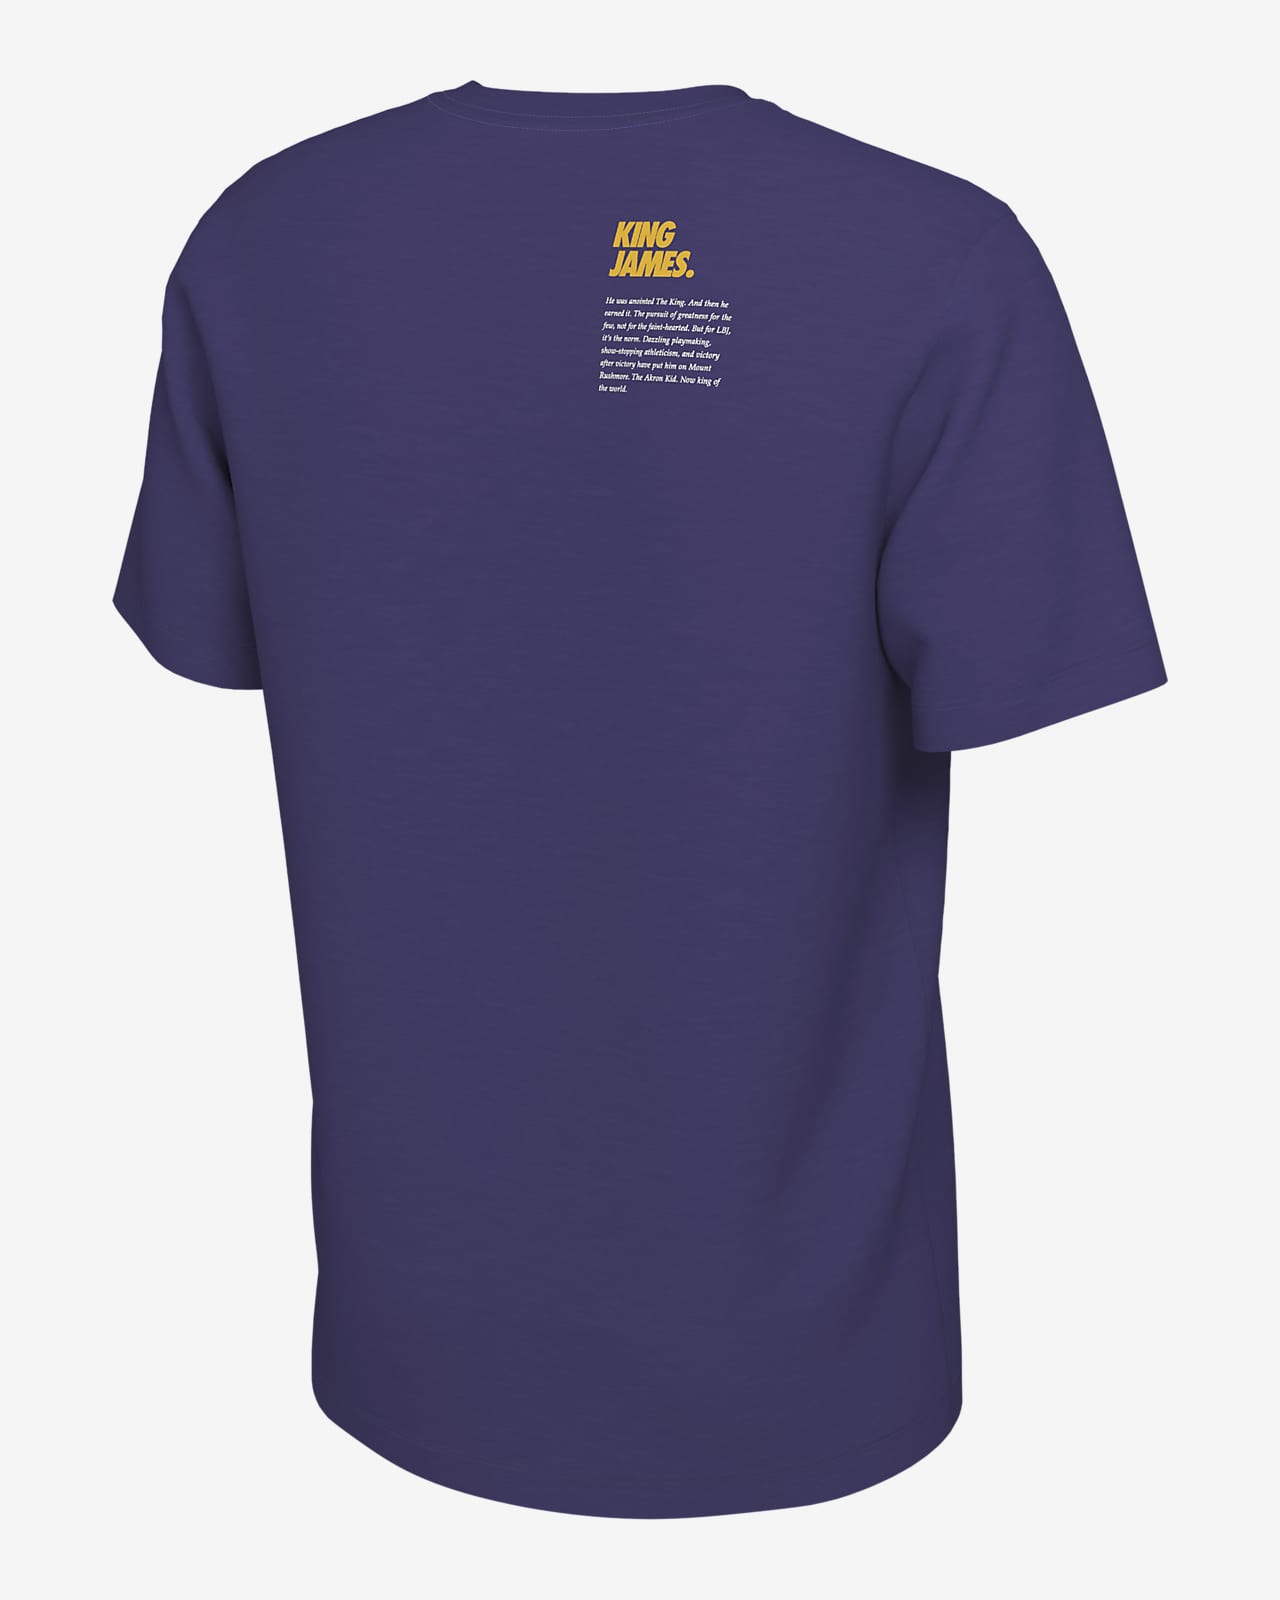 purple lebron james shirt